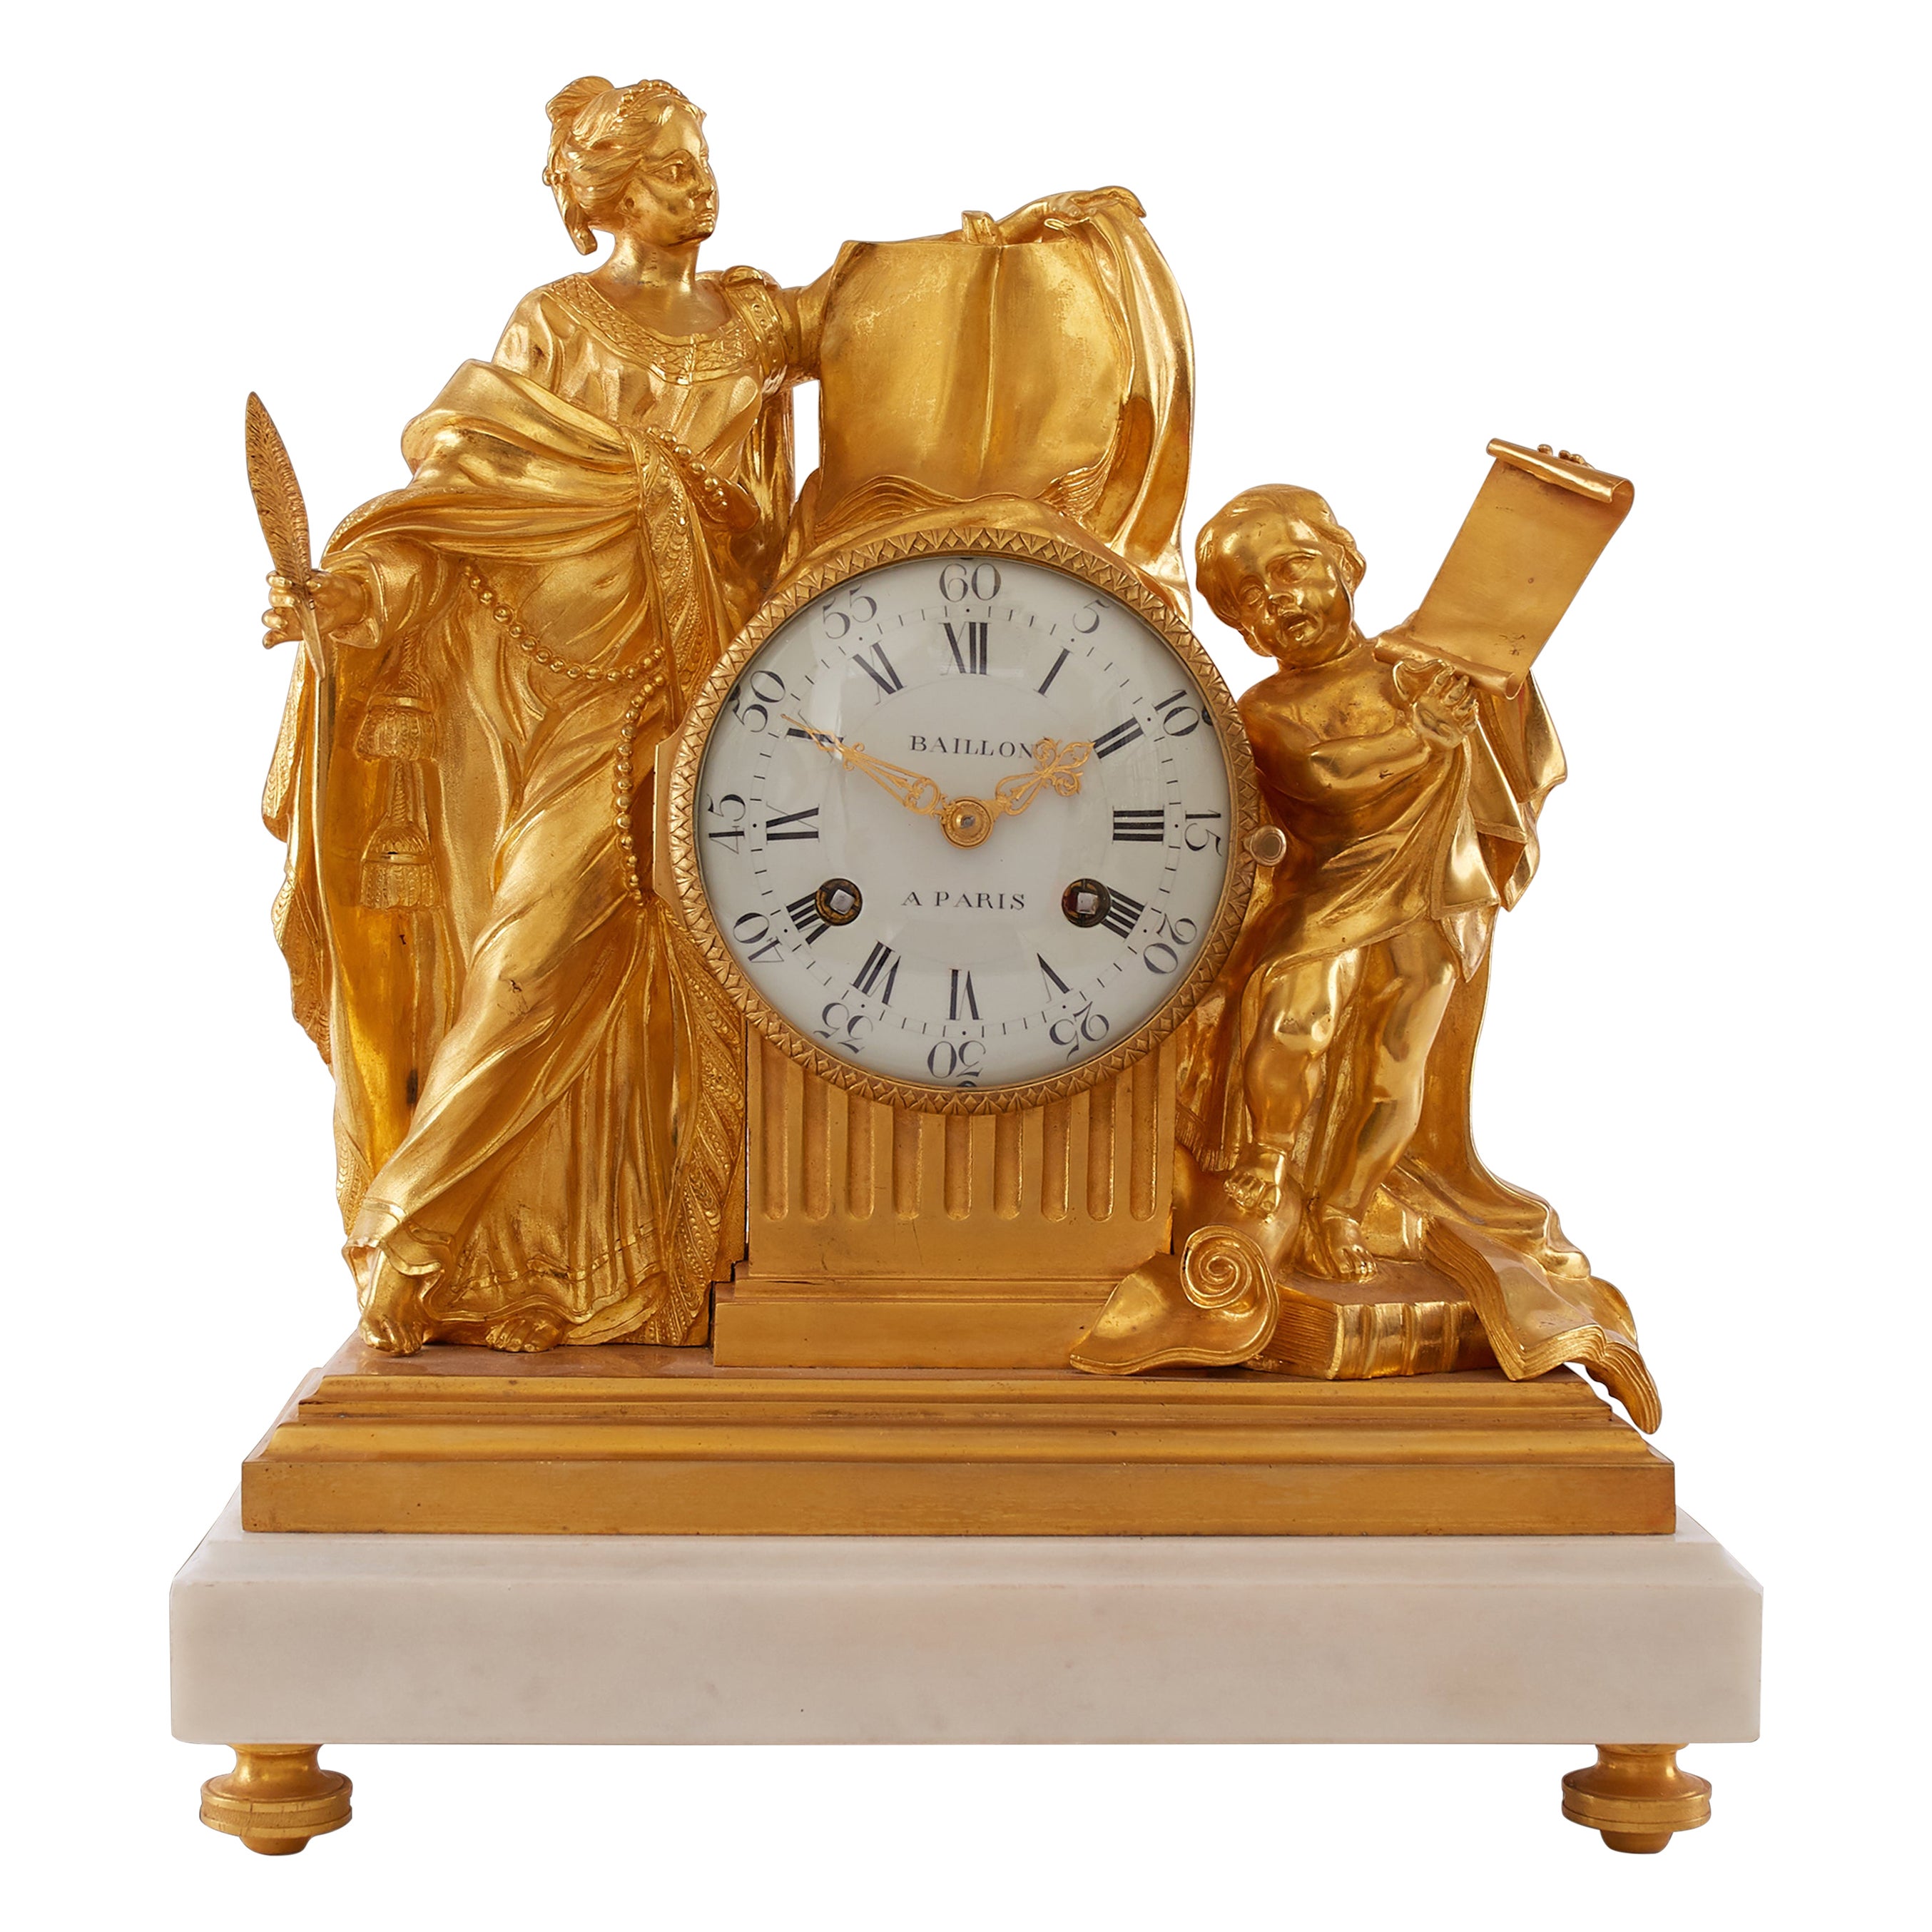 Uhr aus dem 18. Jahrhundert, Baillon in Paris